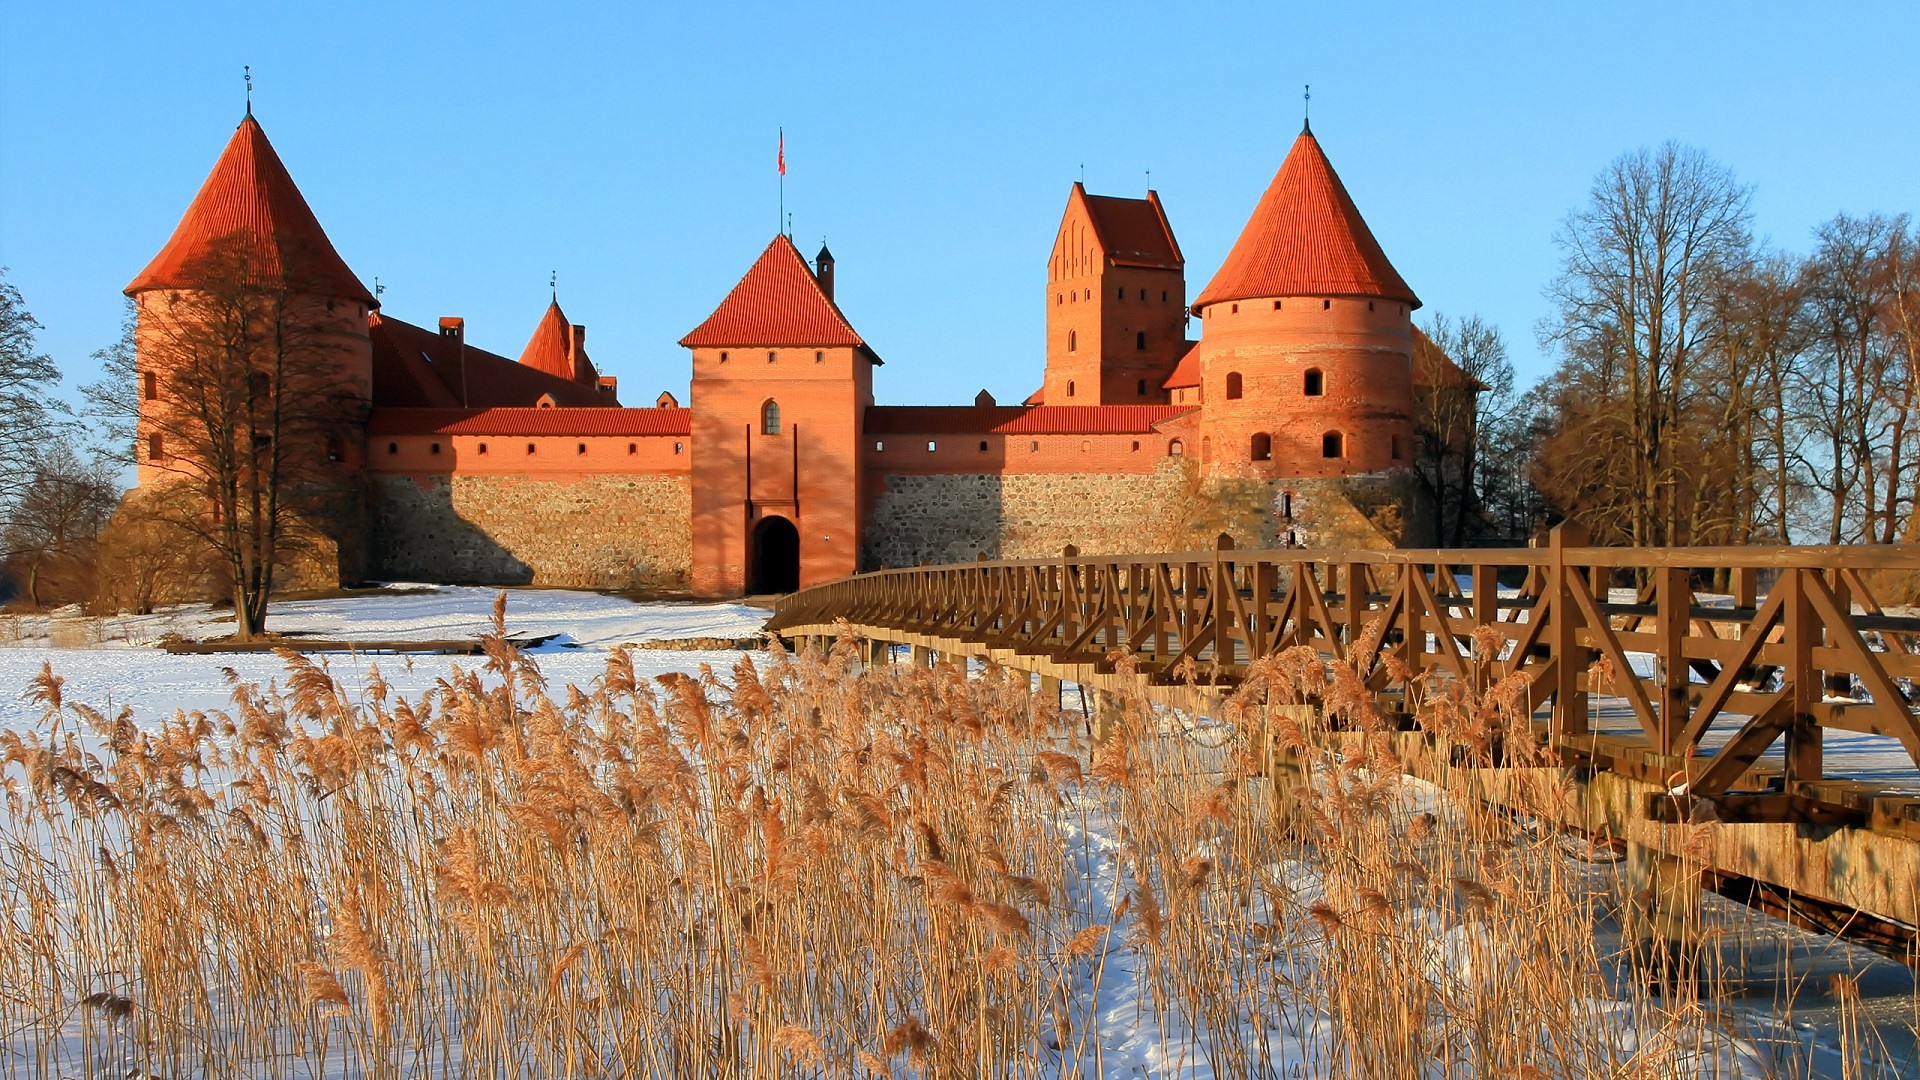 Lithuania travels, Castles lithuania trakai, Hd desktop mobile, 1920x1080 Full HD Desktop